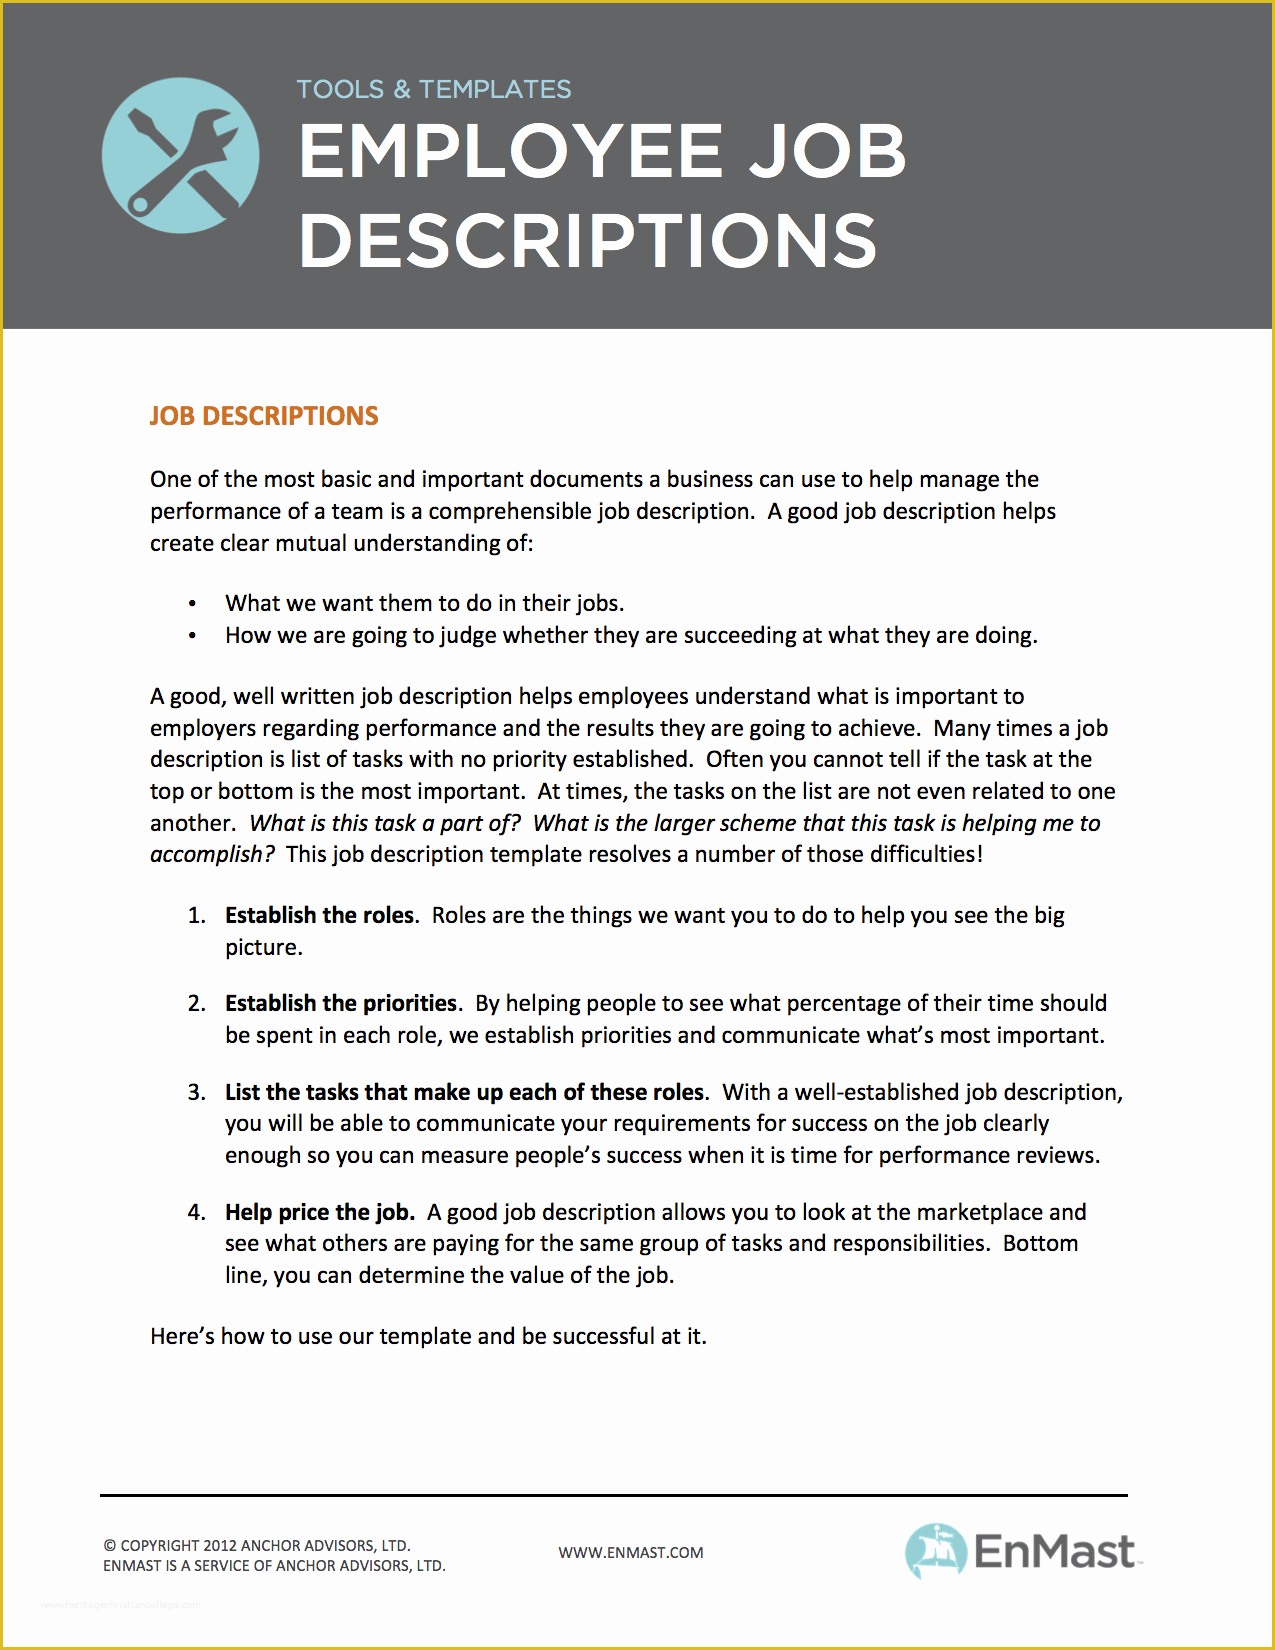 Free Job Description Template Of Employee Job Descriptions tool and Template